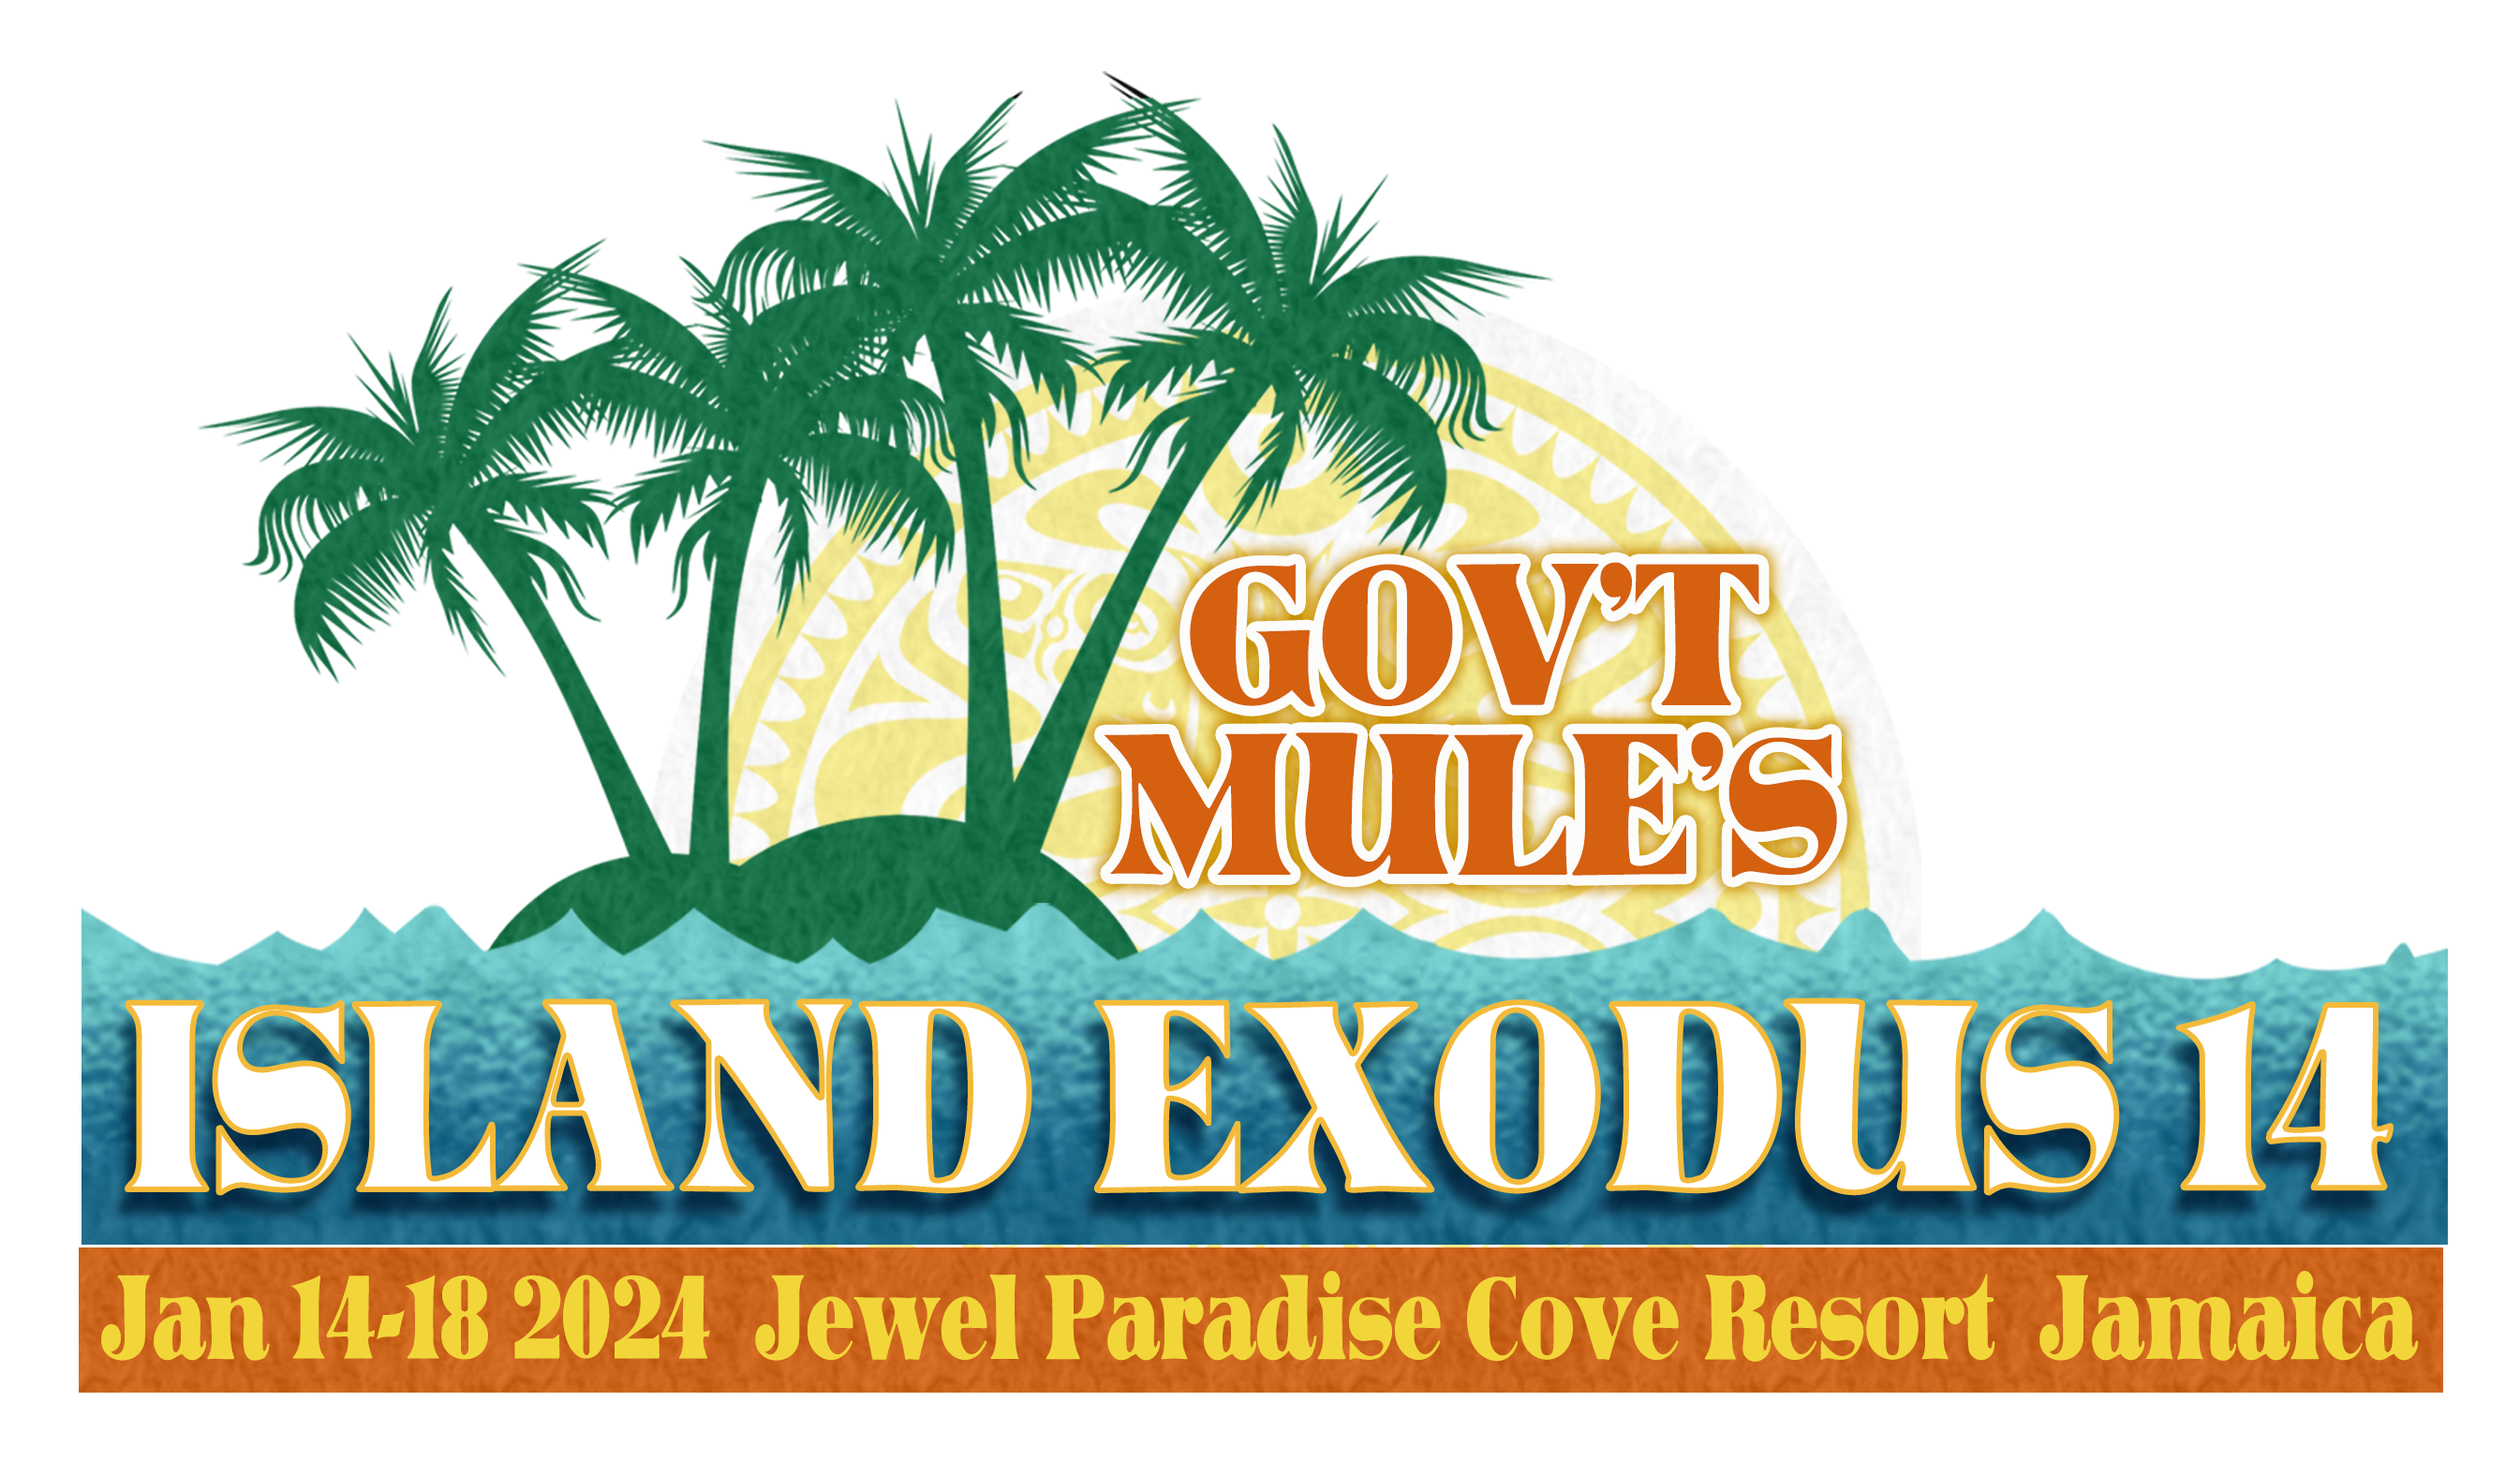 Island Exodus 14 Banner